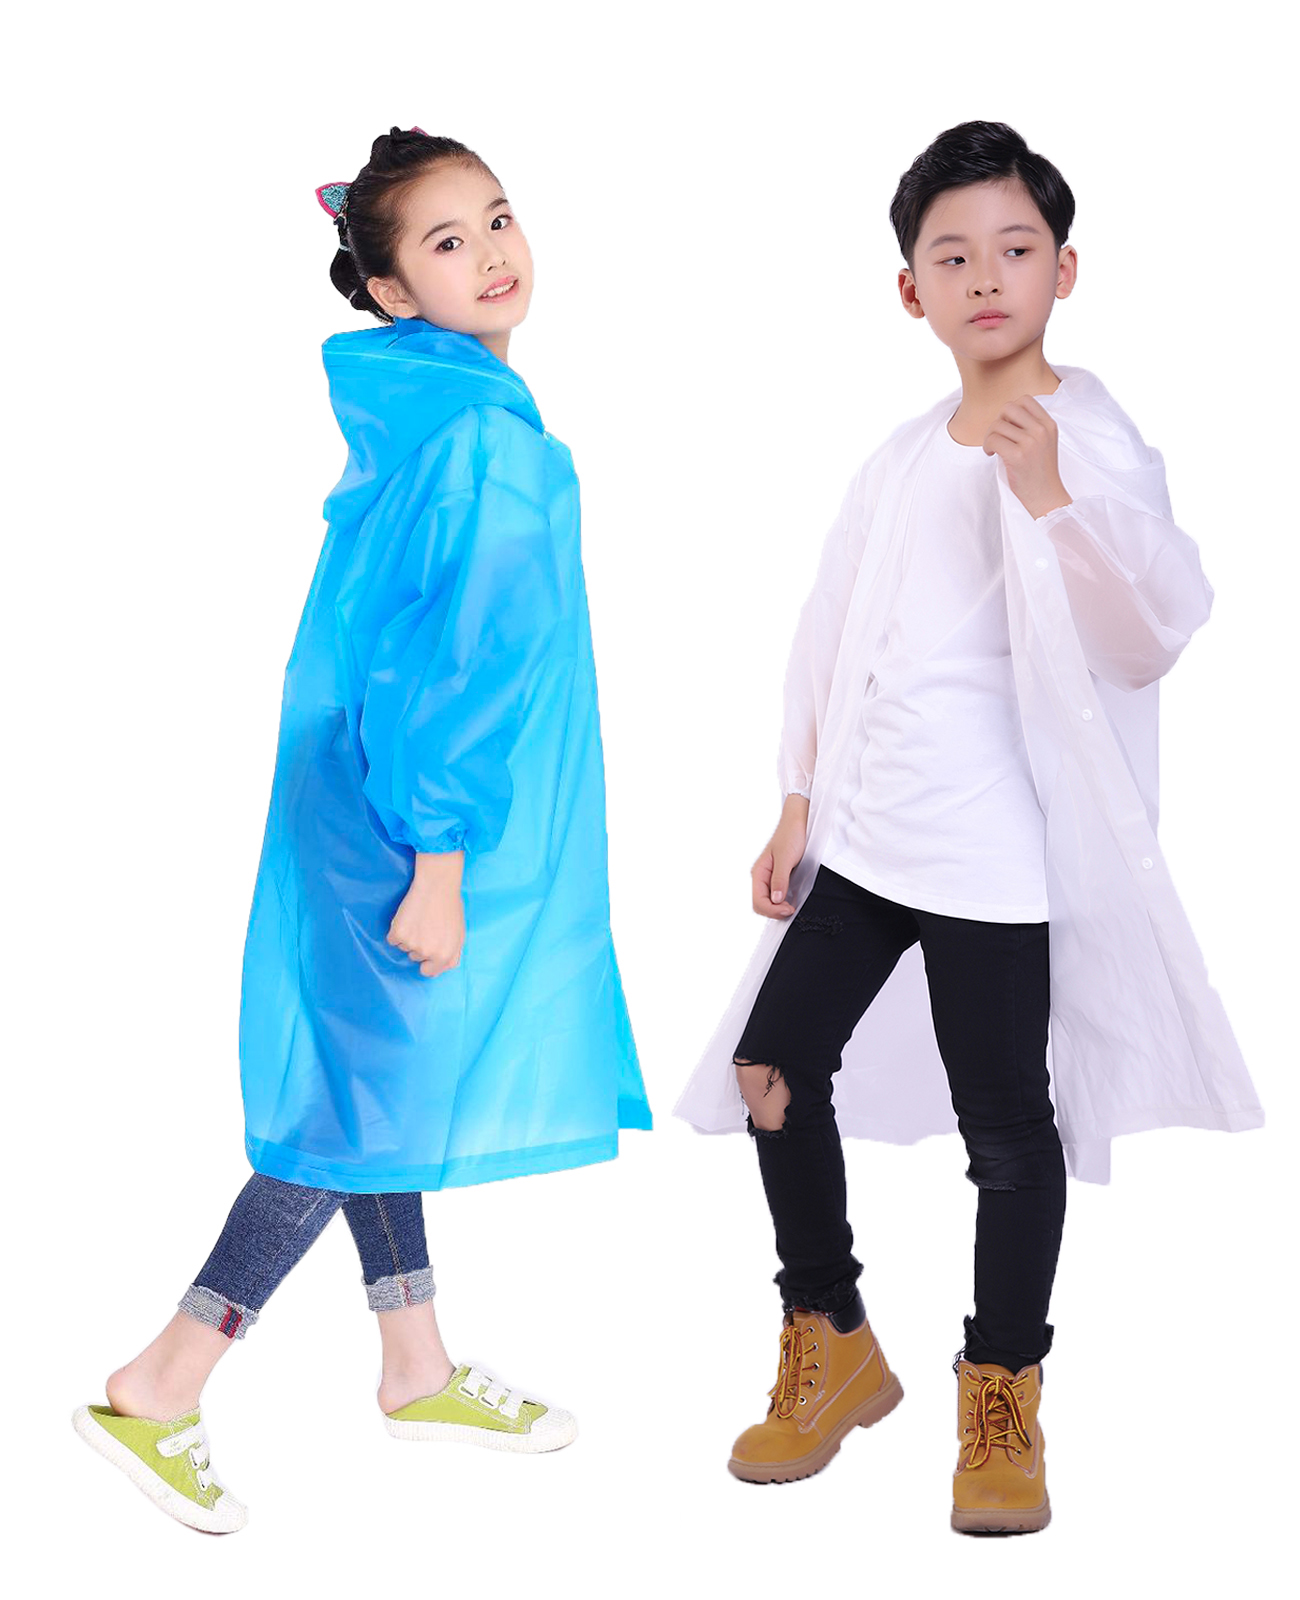 Makonus Raincoat for Kids, [Pack of 2] EVA Kids Rain Coats Reusable Rain Poncho Jacket for Boys and Girls